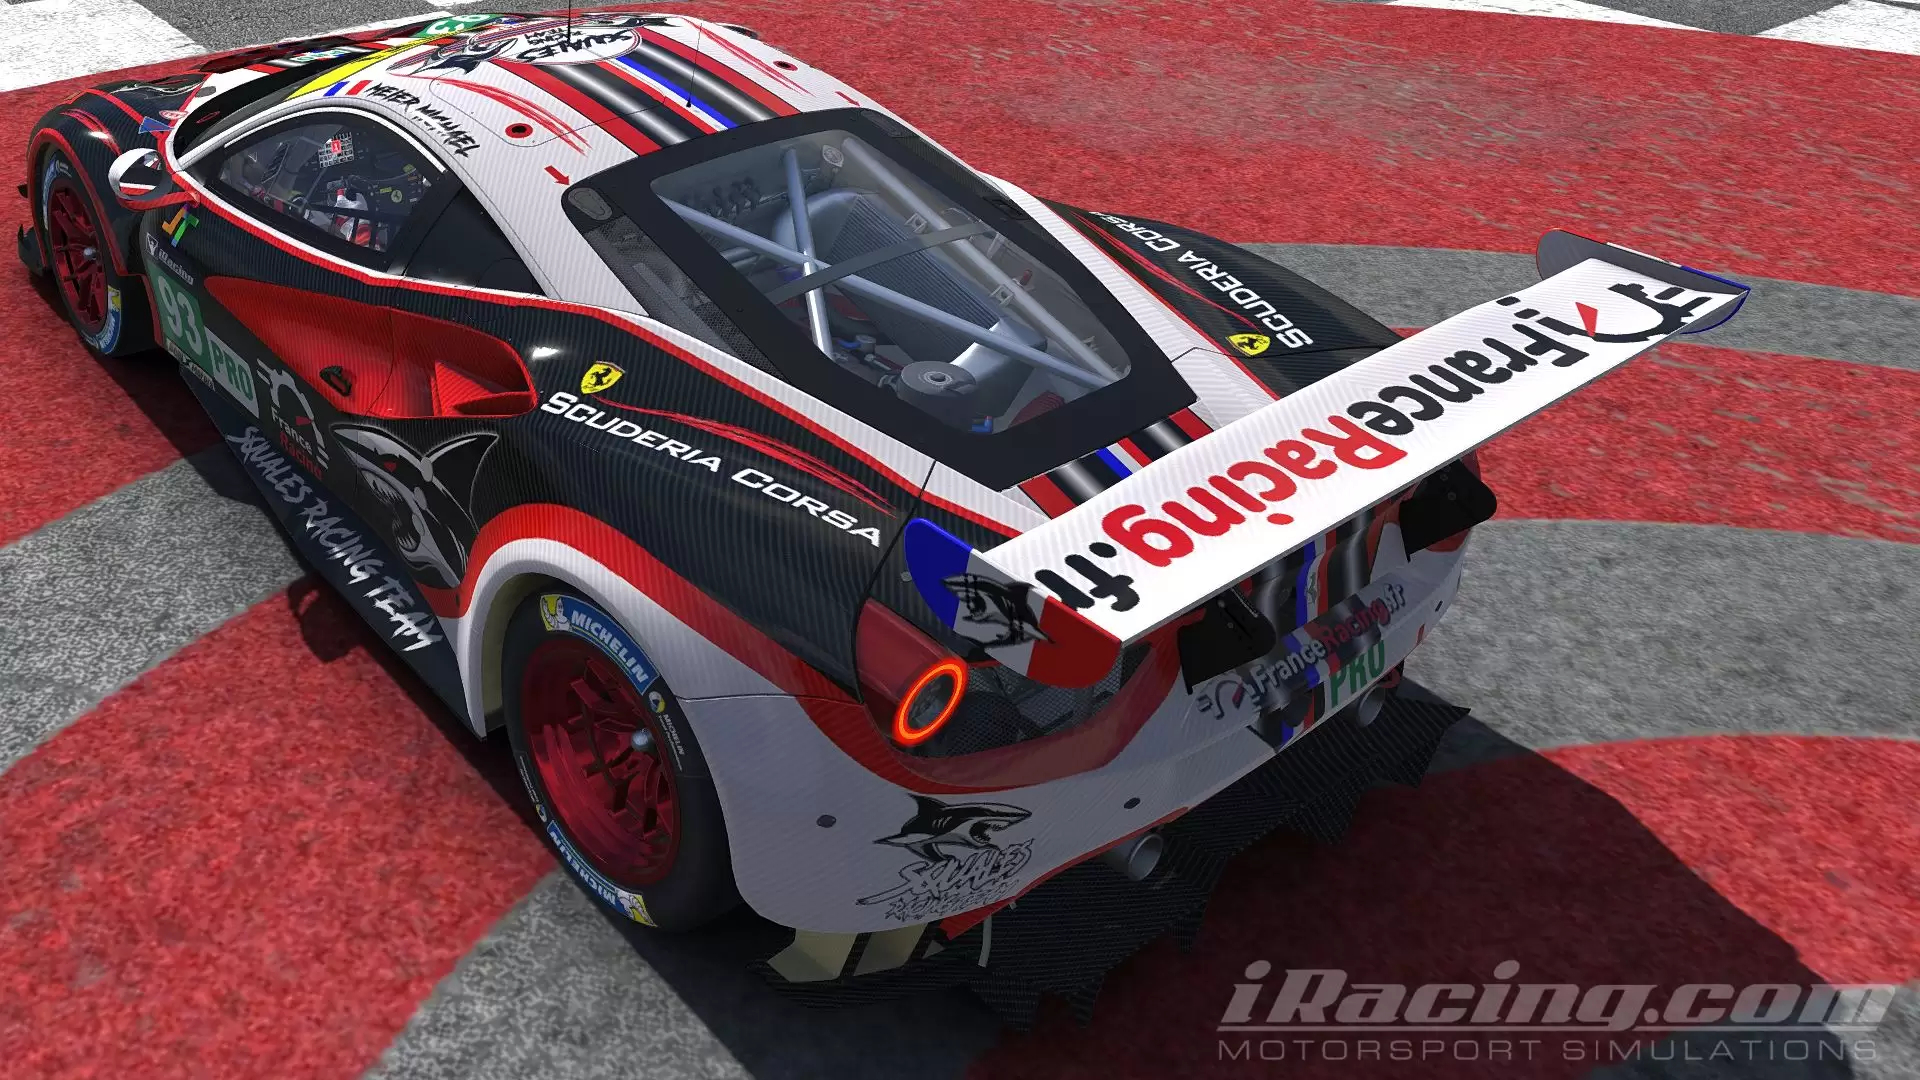 © SQRT SQuales Racing Team - Ferrari 488